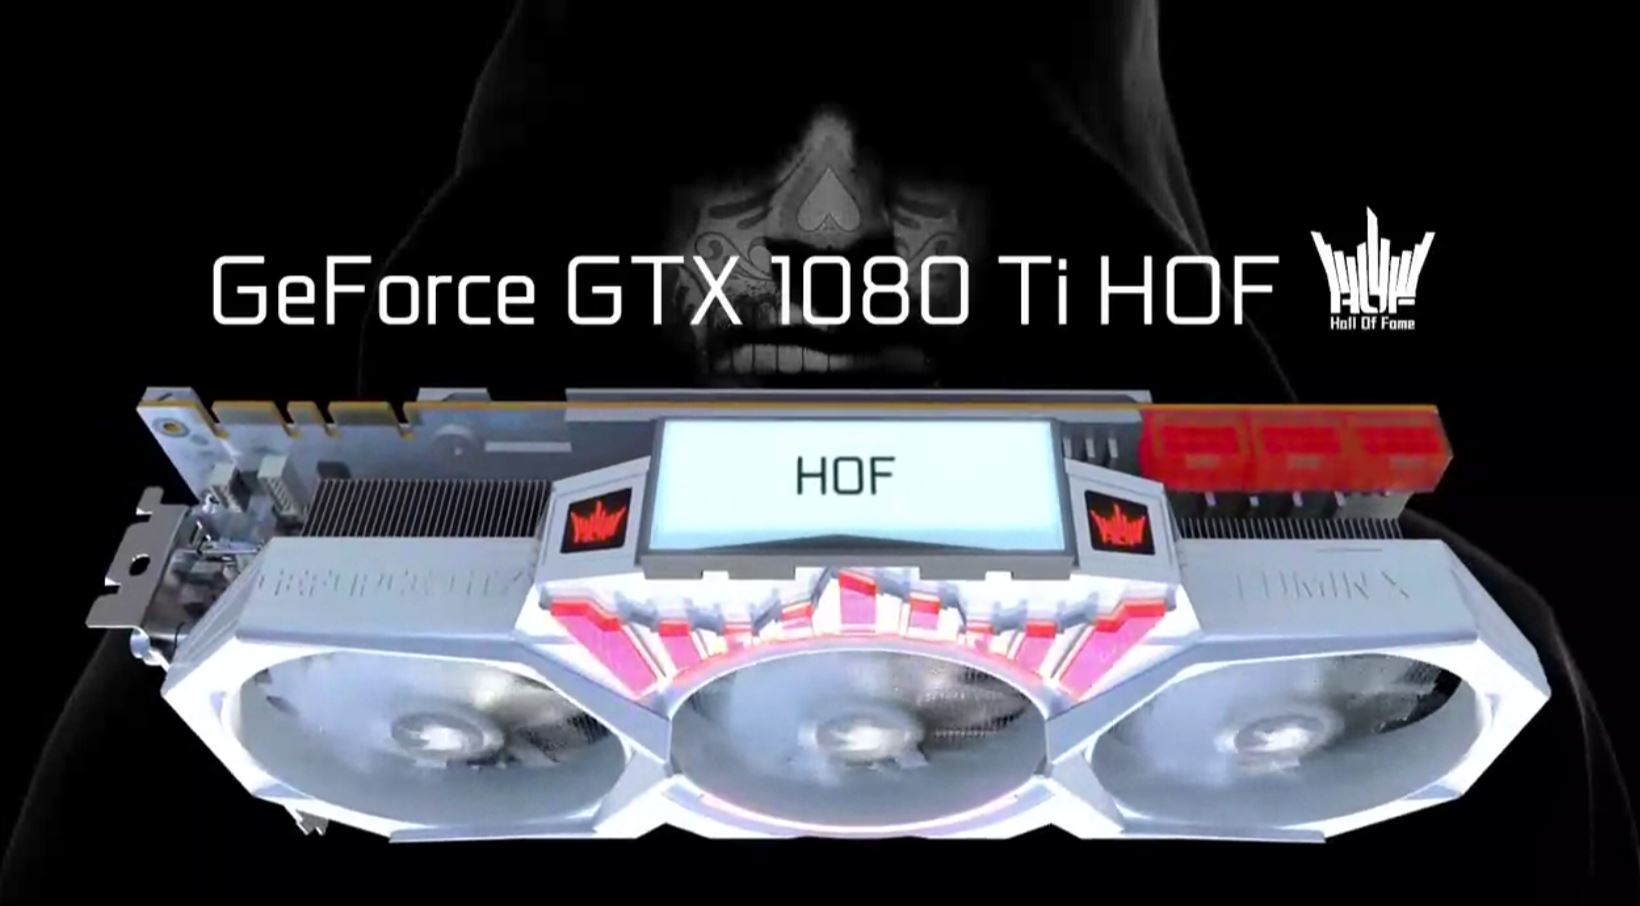 GeForce GTX 1080 GALAX HOF『Hall of Fame』